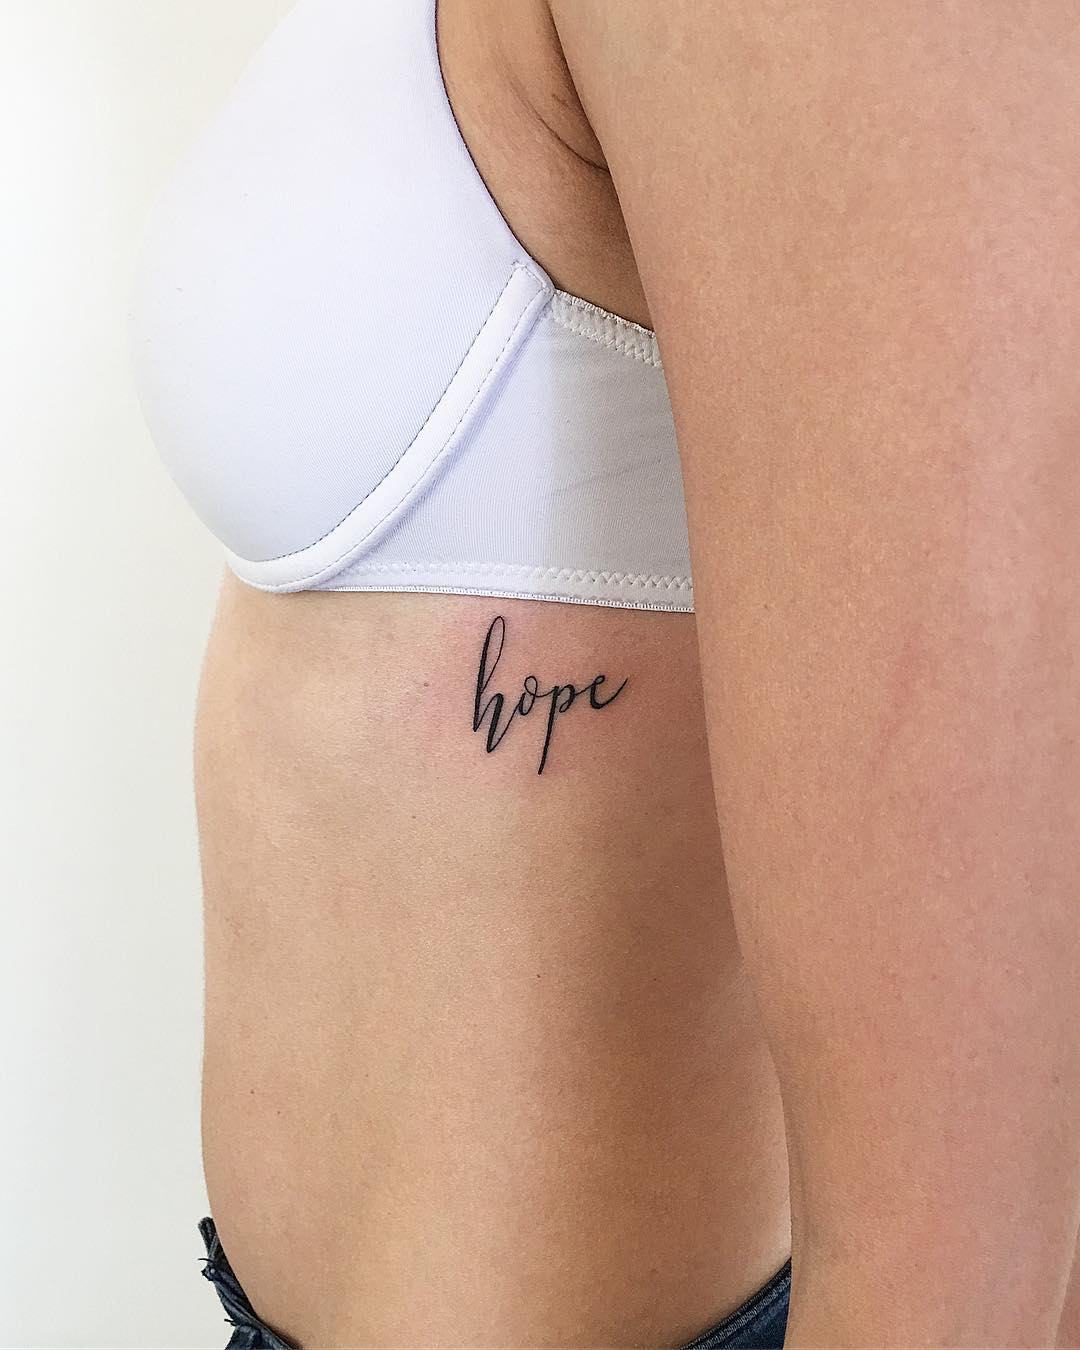 Hope by @soychapa